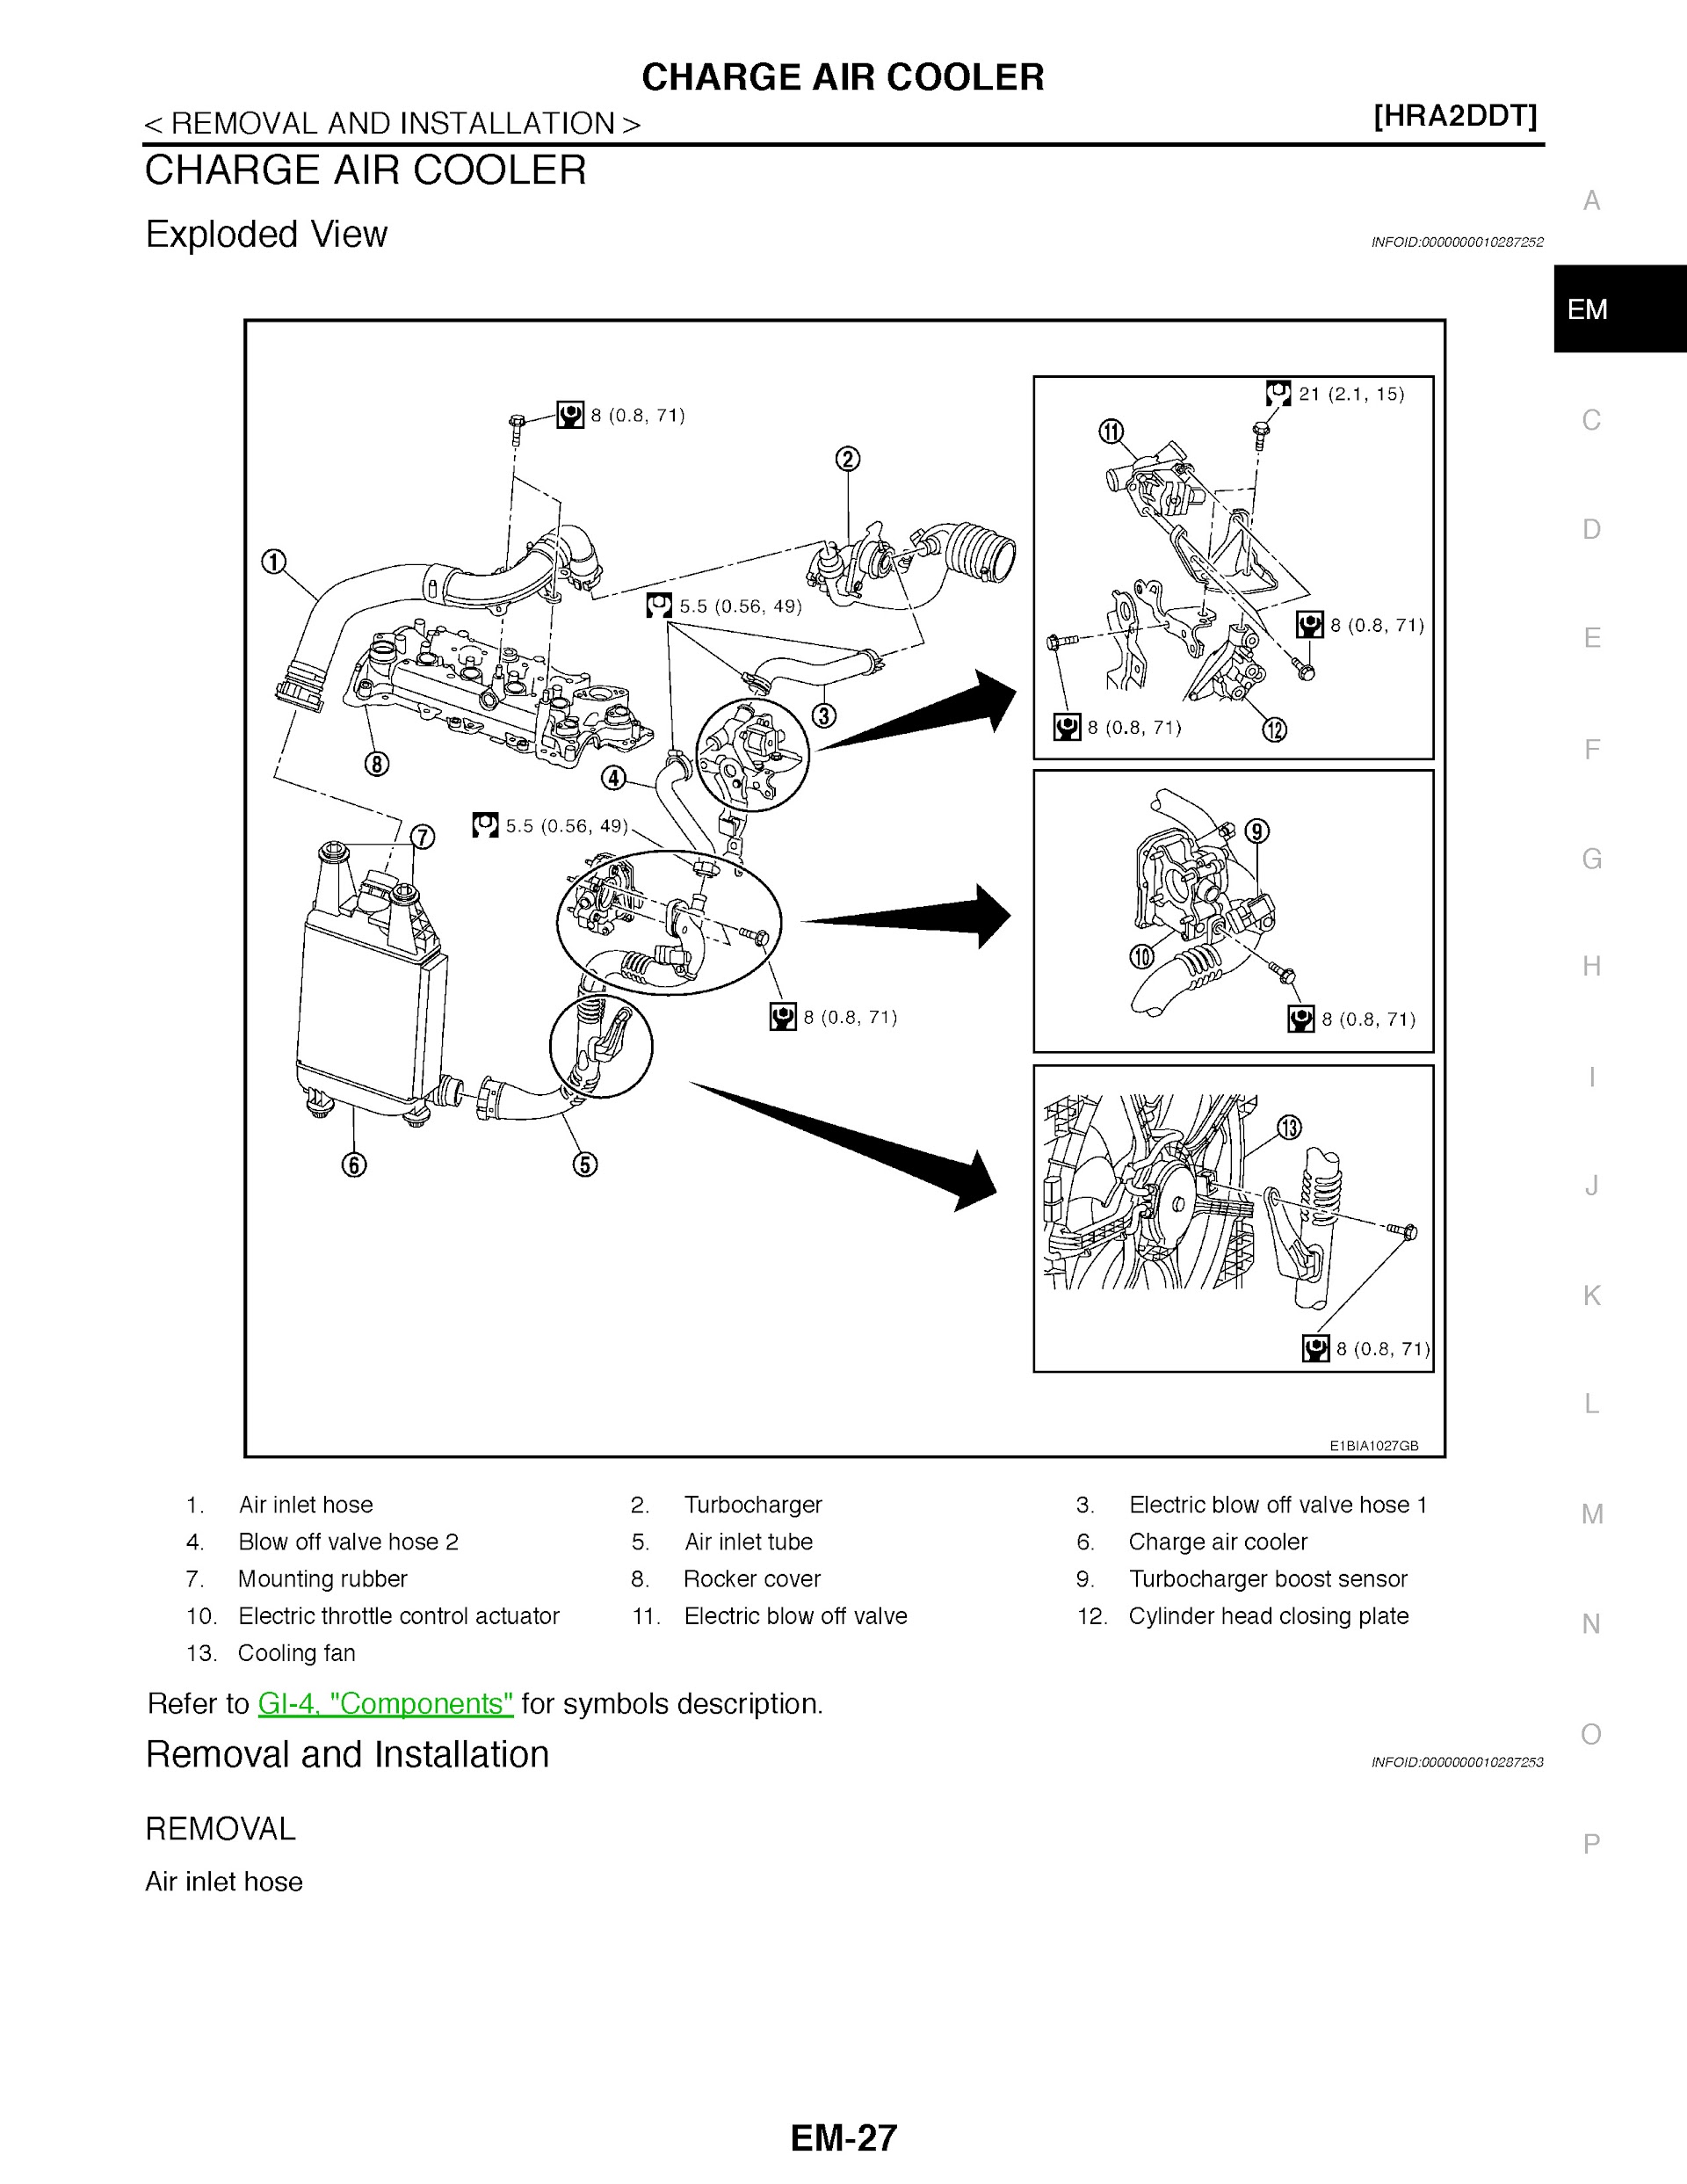 Nissan Qashqai Repair Manual, Charge Air Cooler Removal and Installation